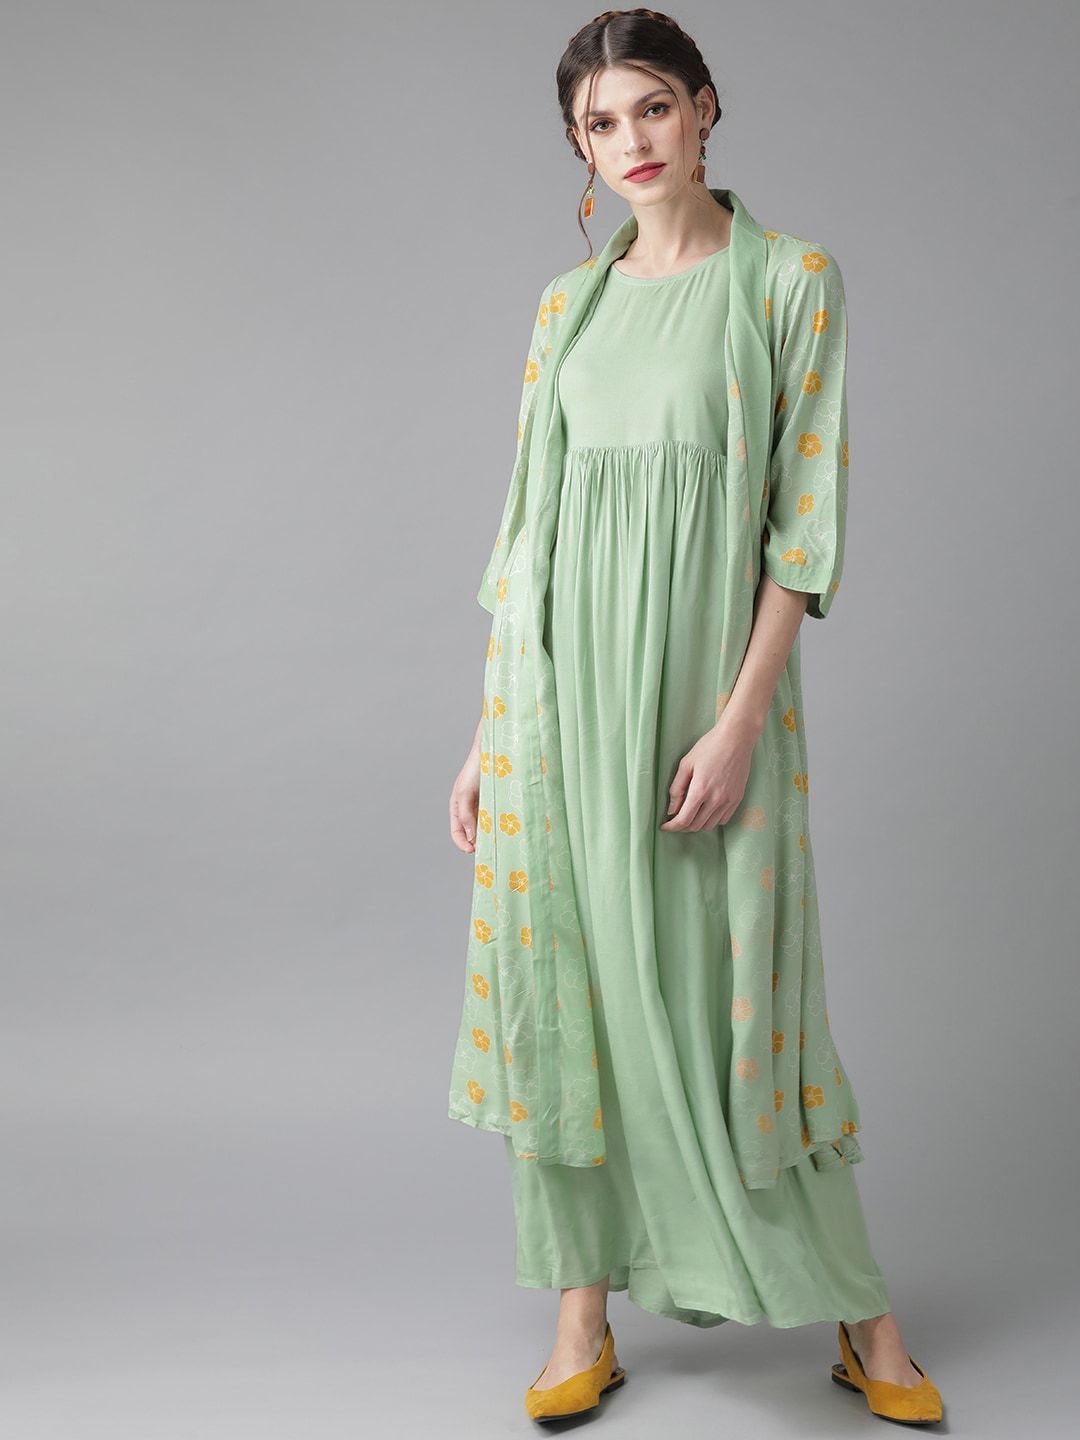 Women's  Green & Mustard Yellow Printed Layered Maxi Dress - AKS